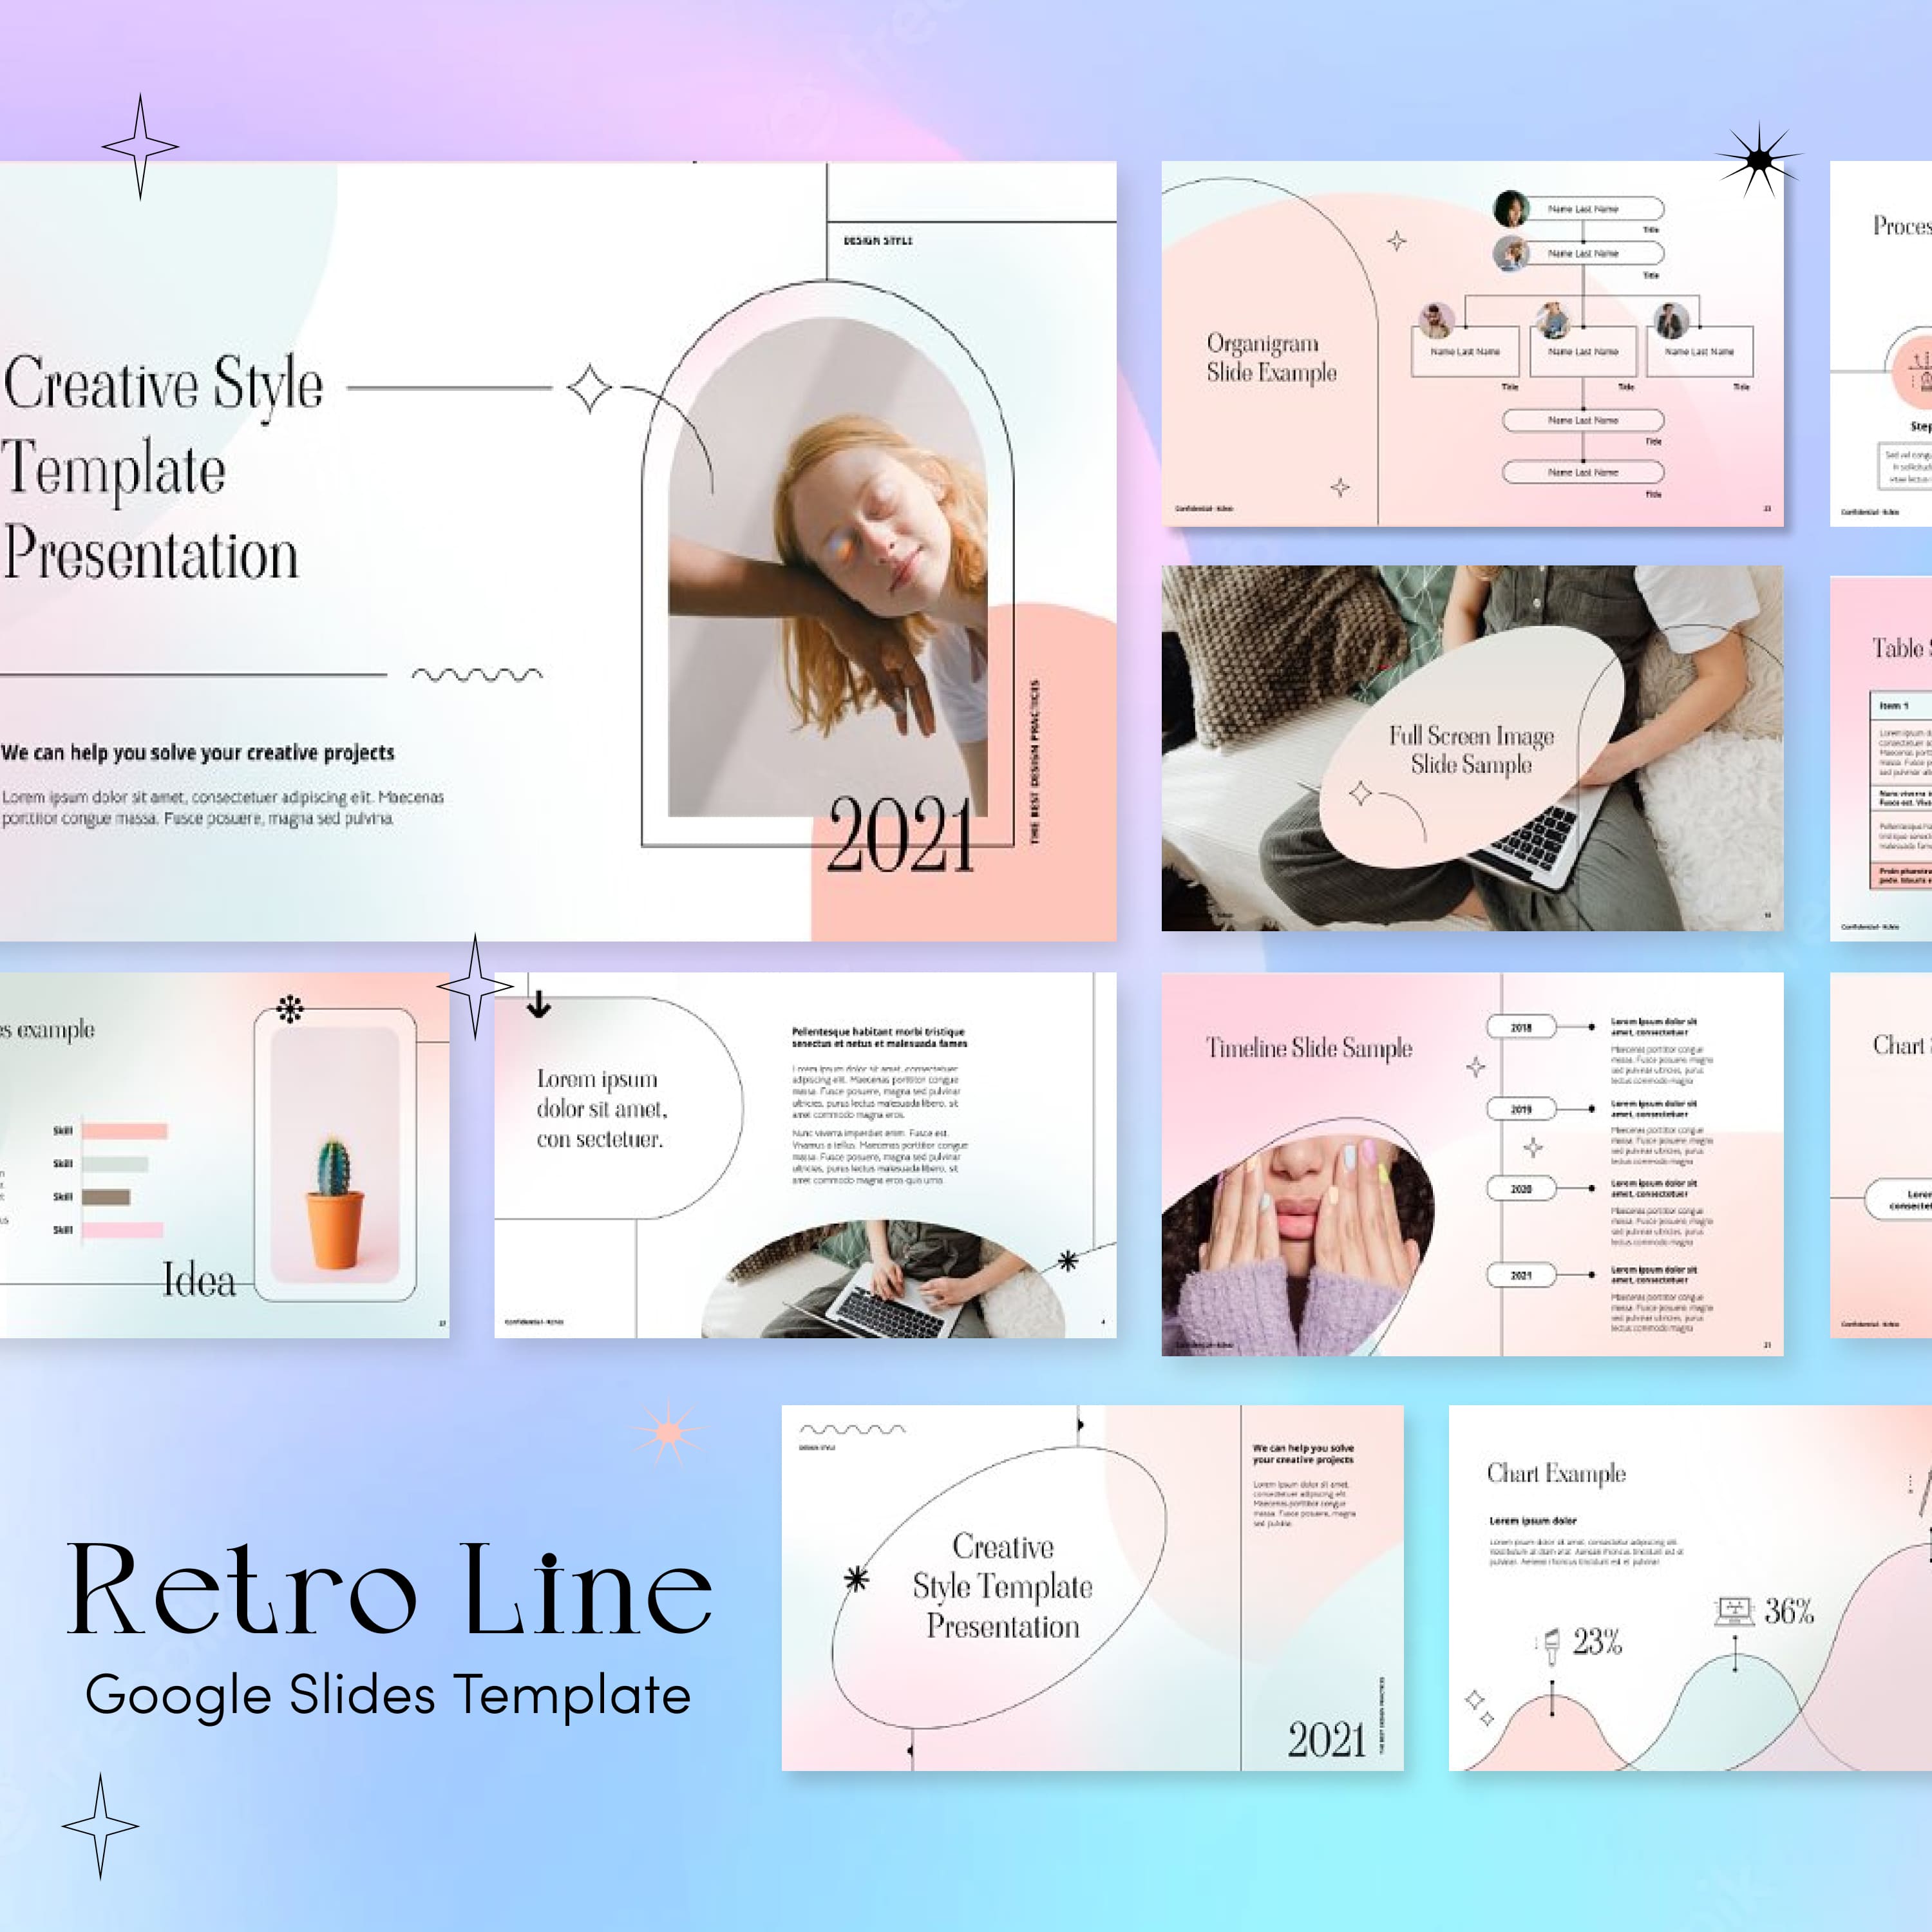 Retro Line - Google Slides Template.